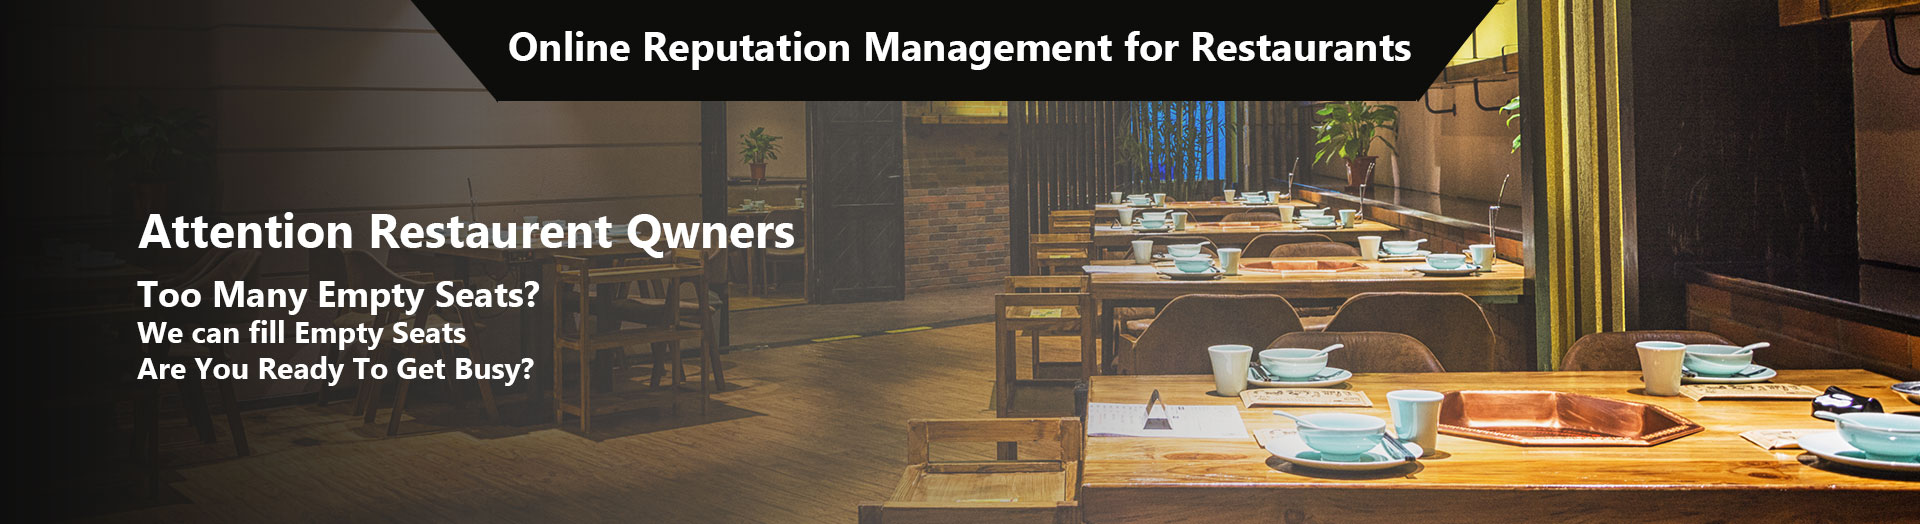 Online Reputation Management for Restaurants